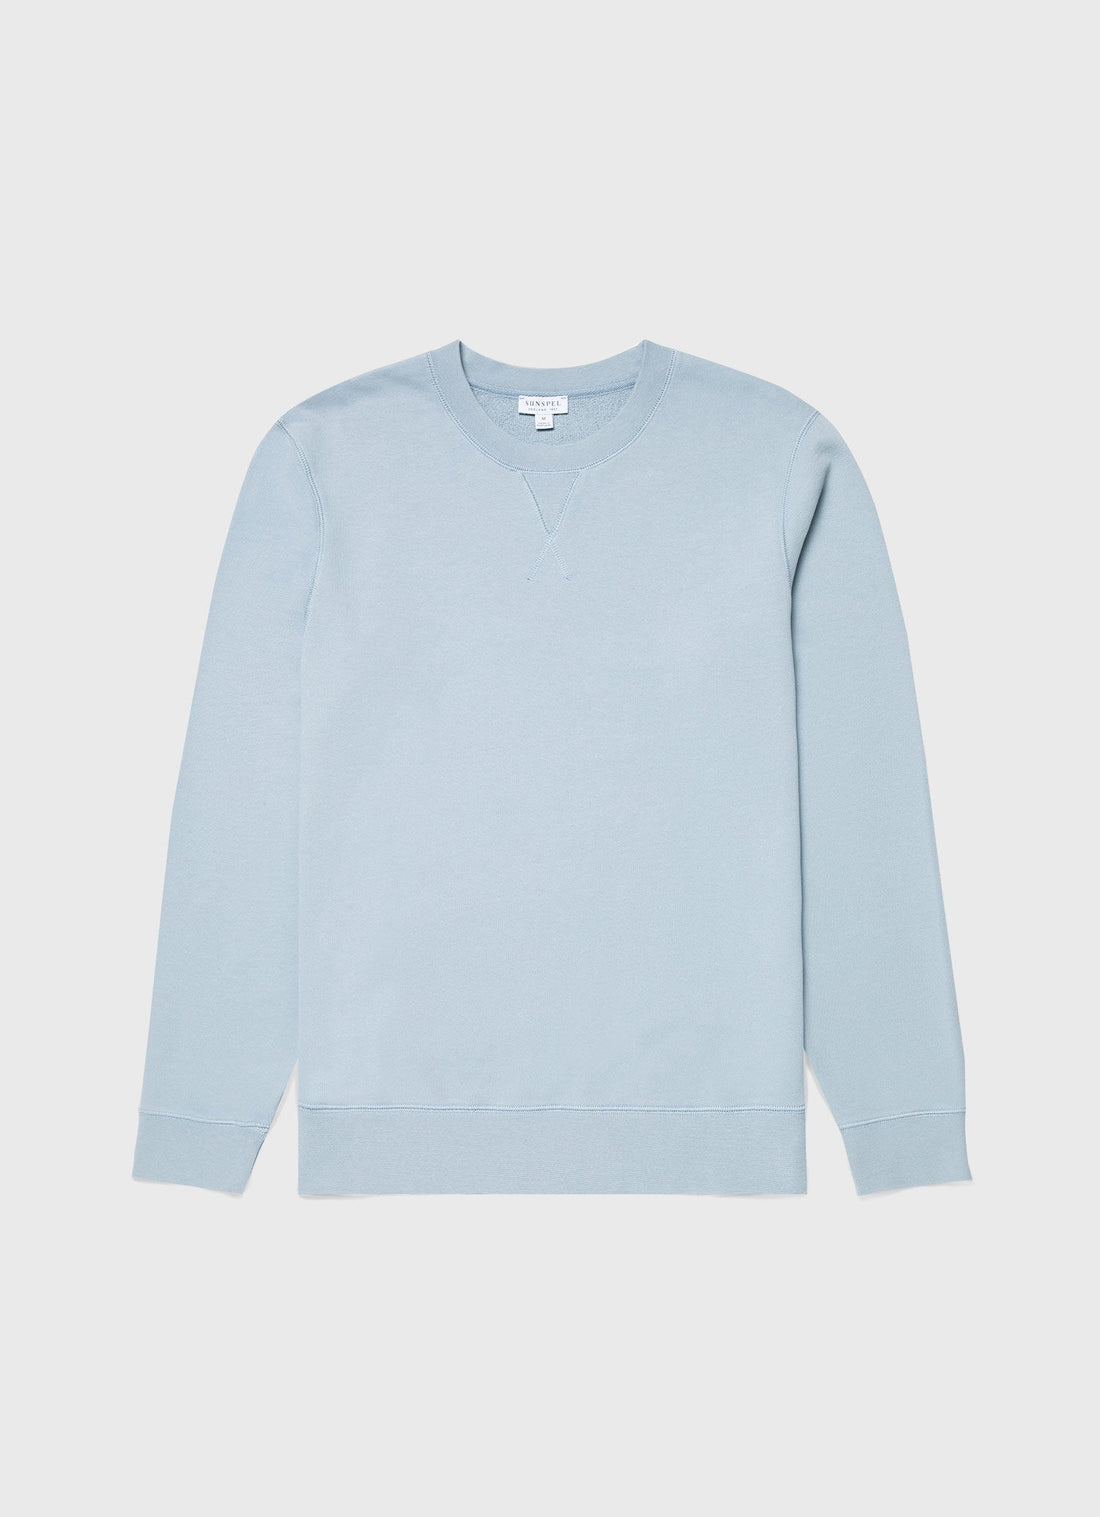 Men's Loopback Sweatshirt in Smoke Blue